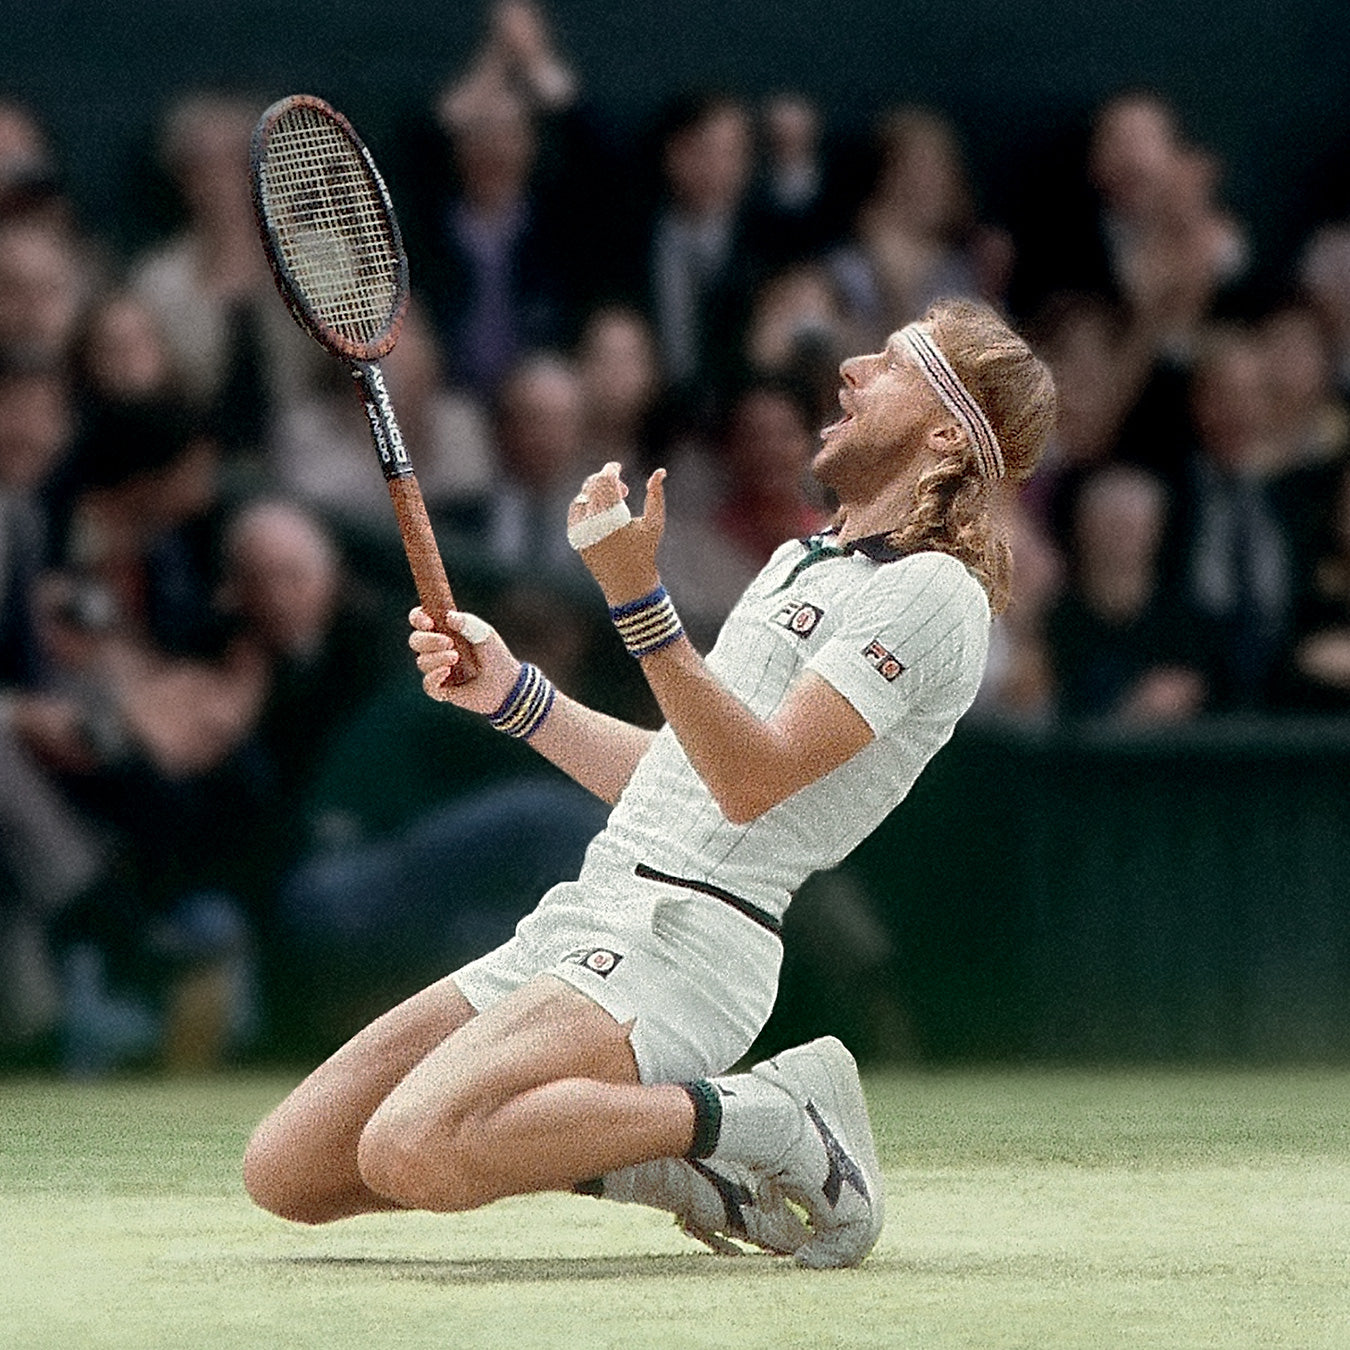 Rolex Testimonee Björn Borg Celebrates a Point During a Tennis Match